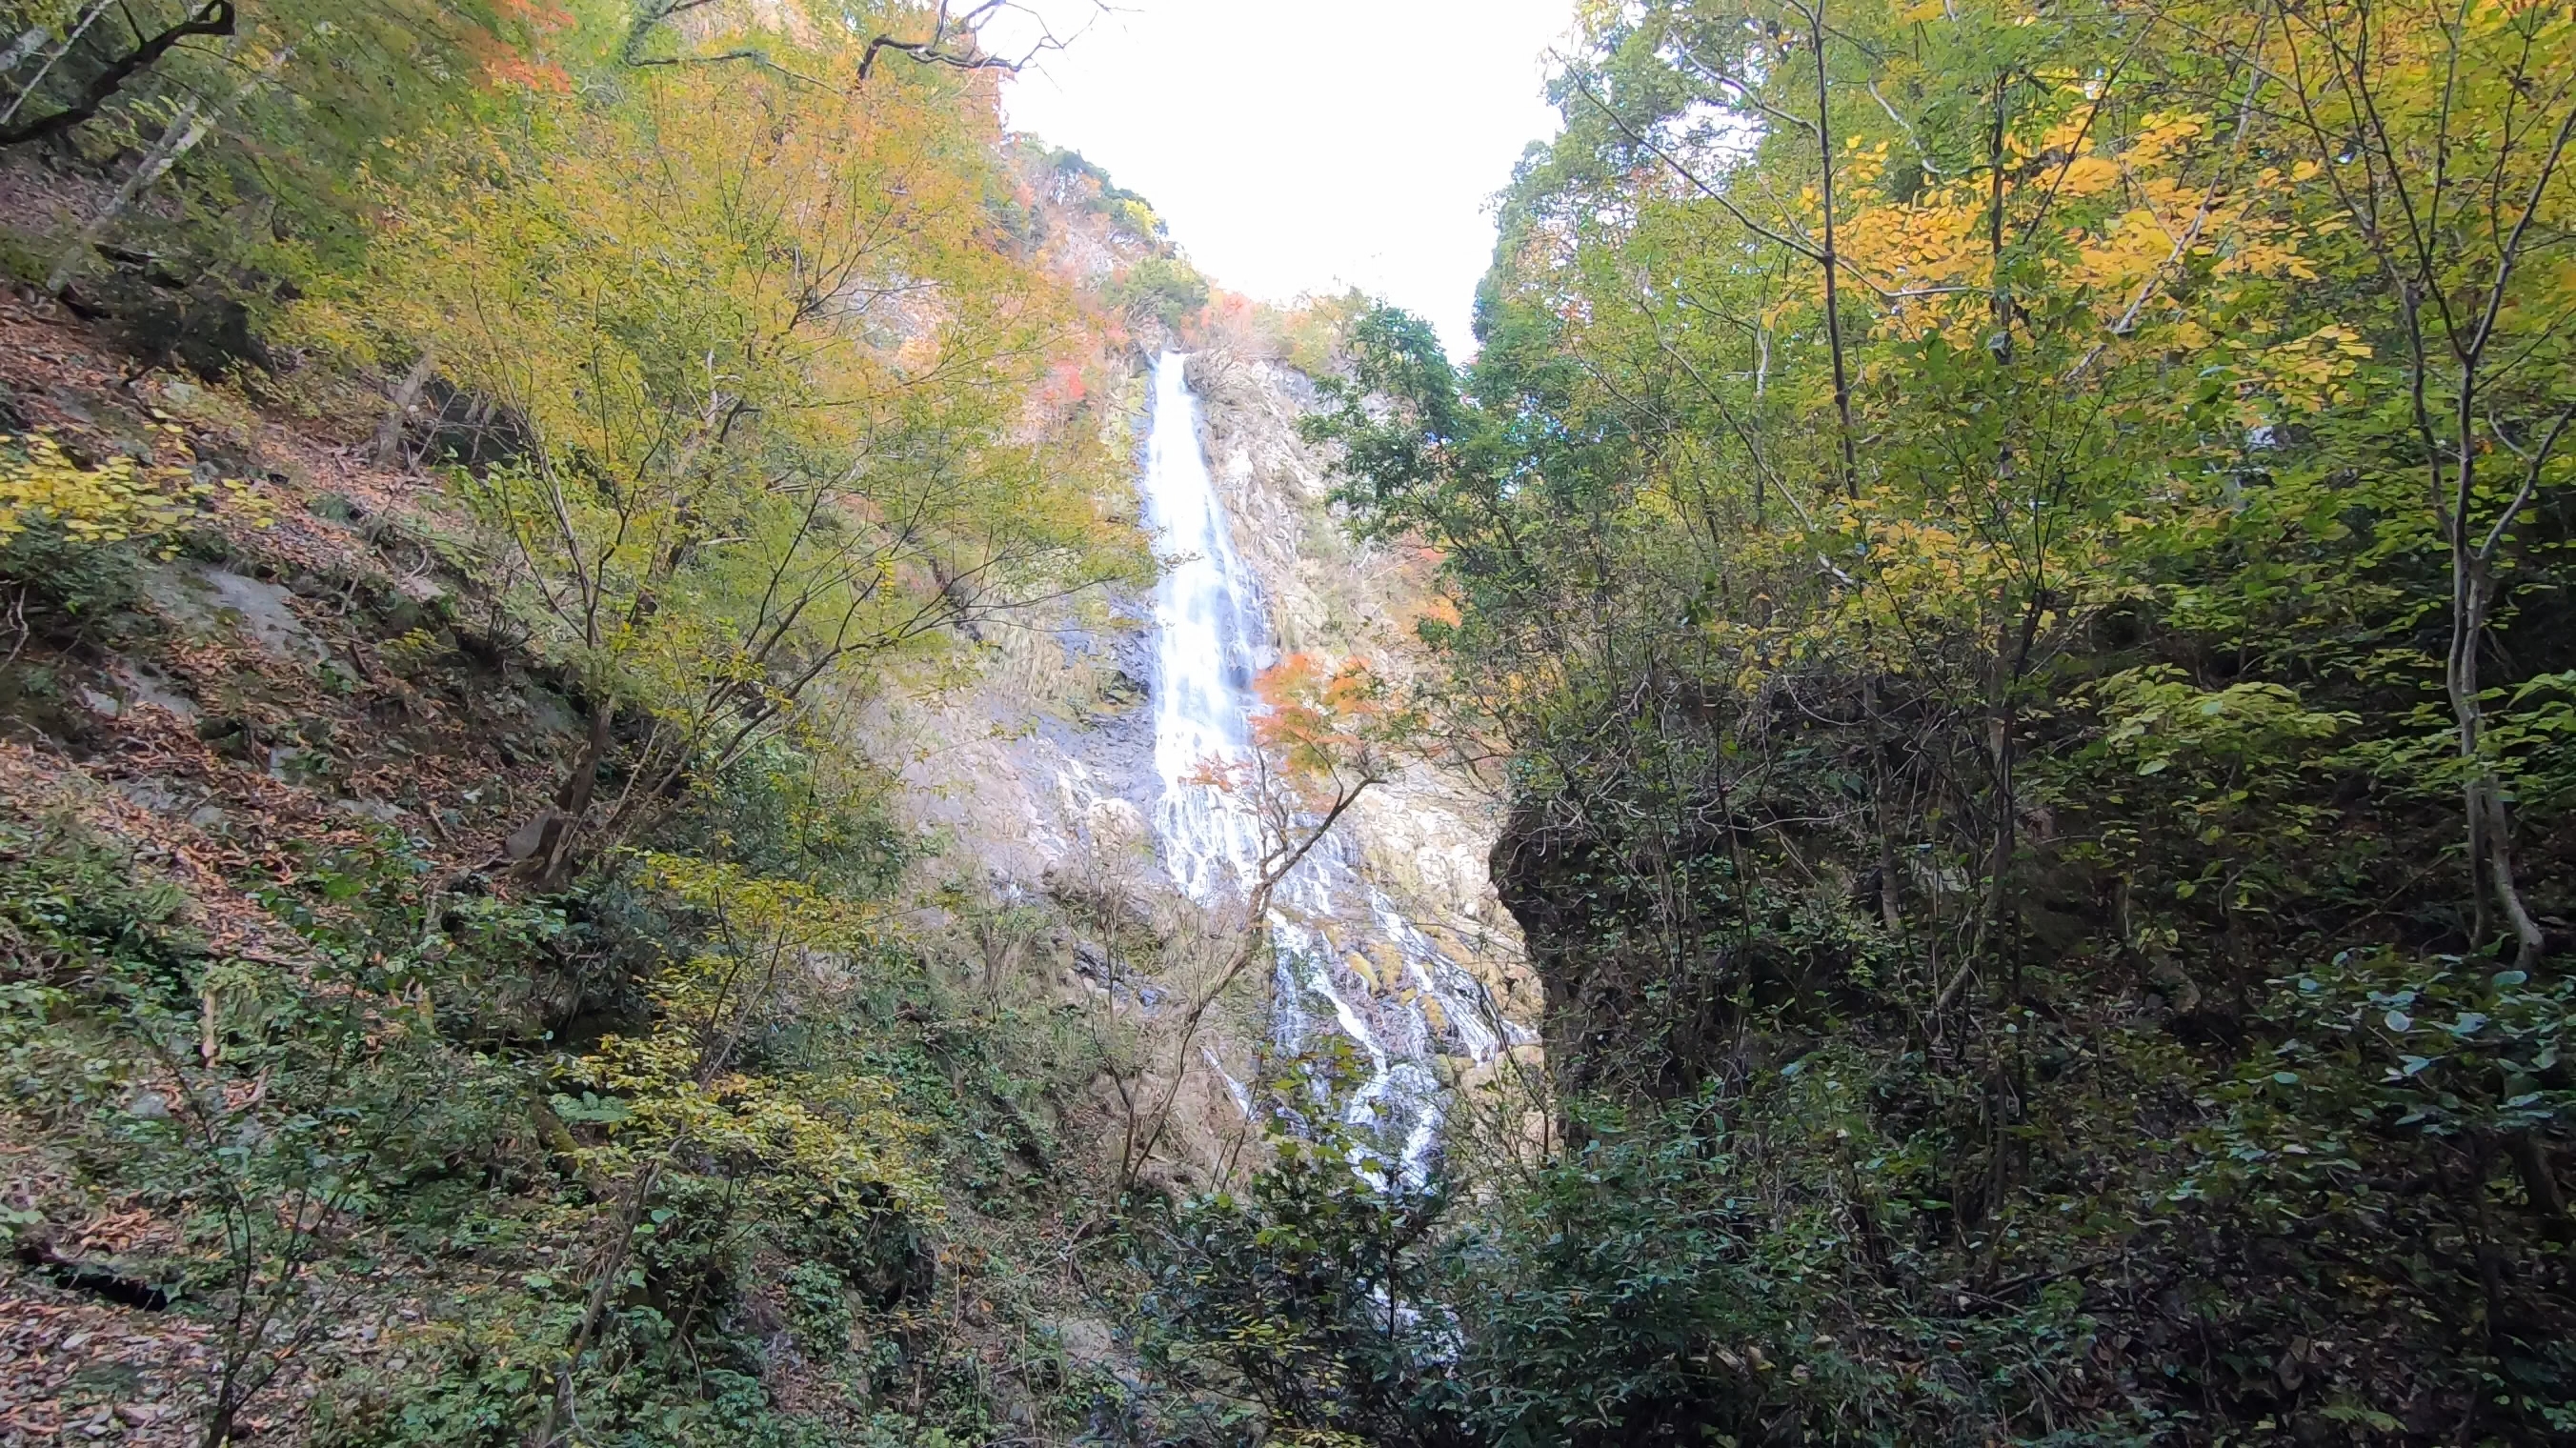 GH011930 兵庫県  天滝 (兵庫県一の落差を誇る紅葉景色の美しい絶景の滝 !撮影した写真の紹介、 アクセス情報や撮影ポイントなど!)　